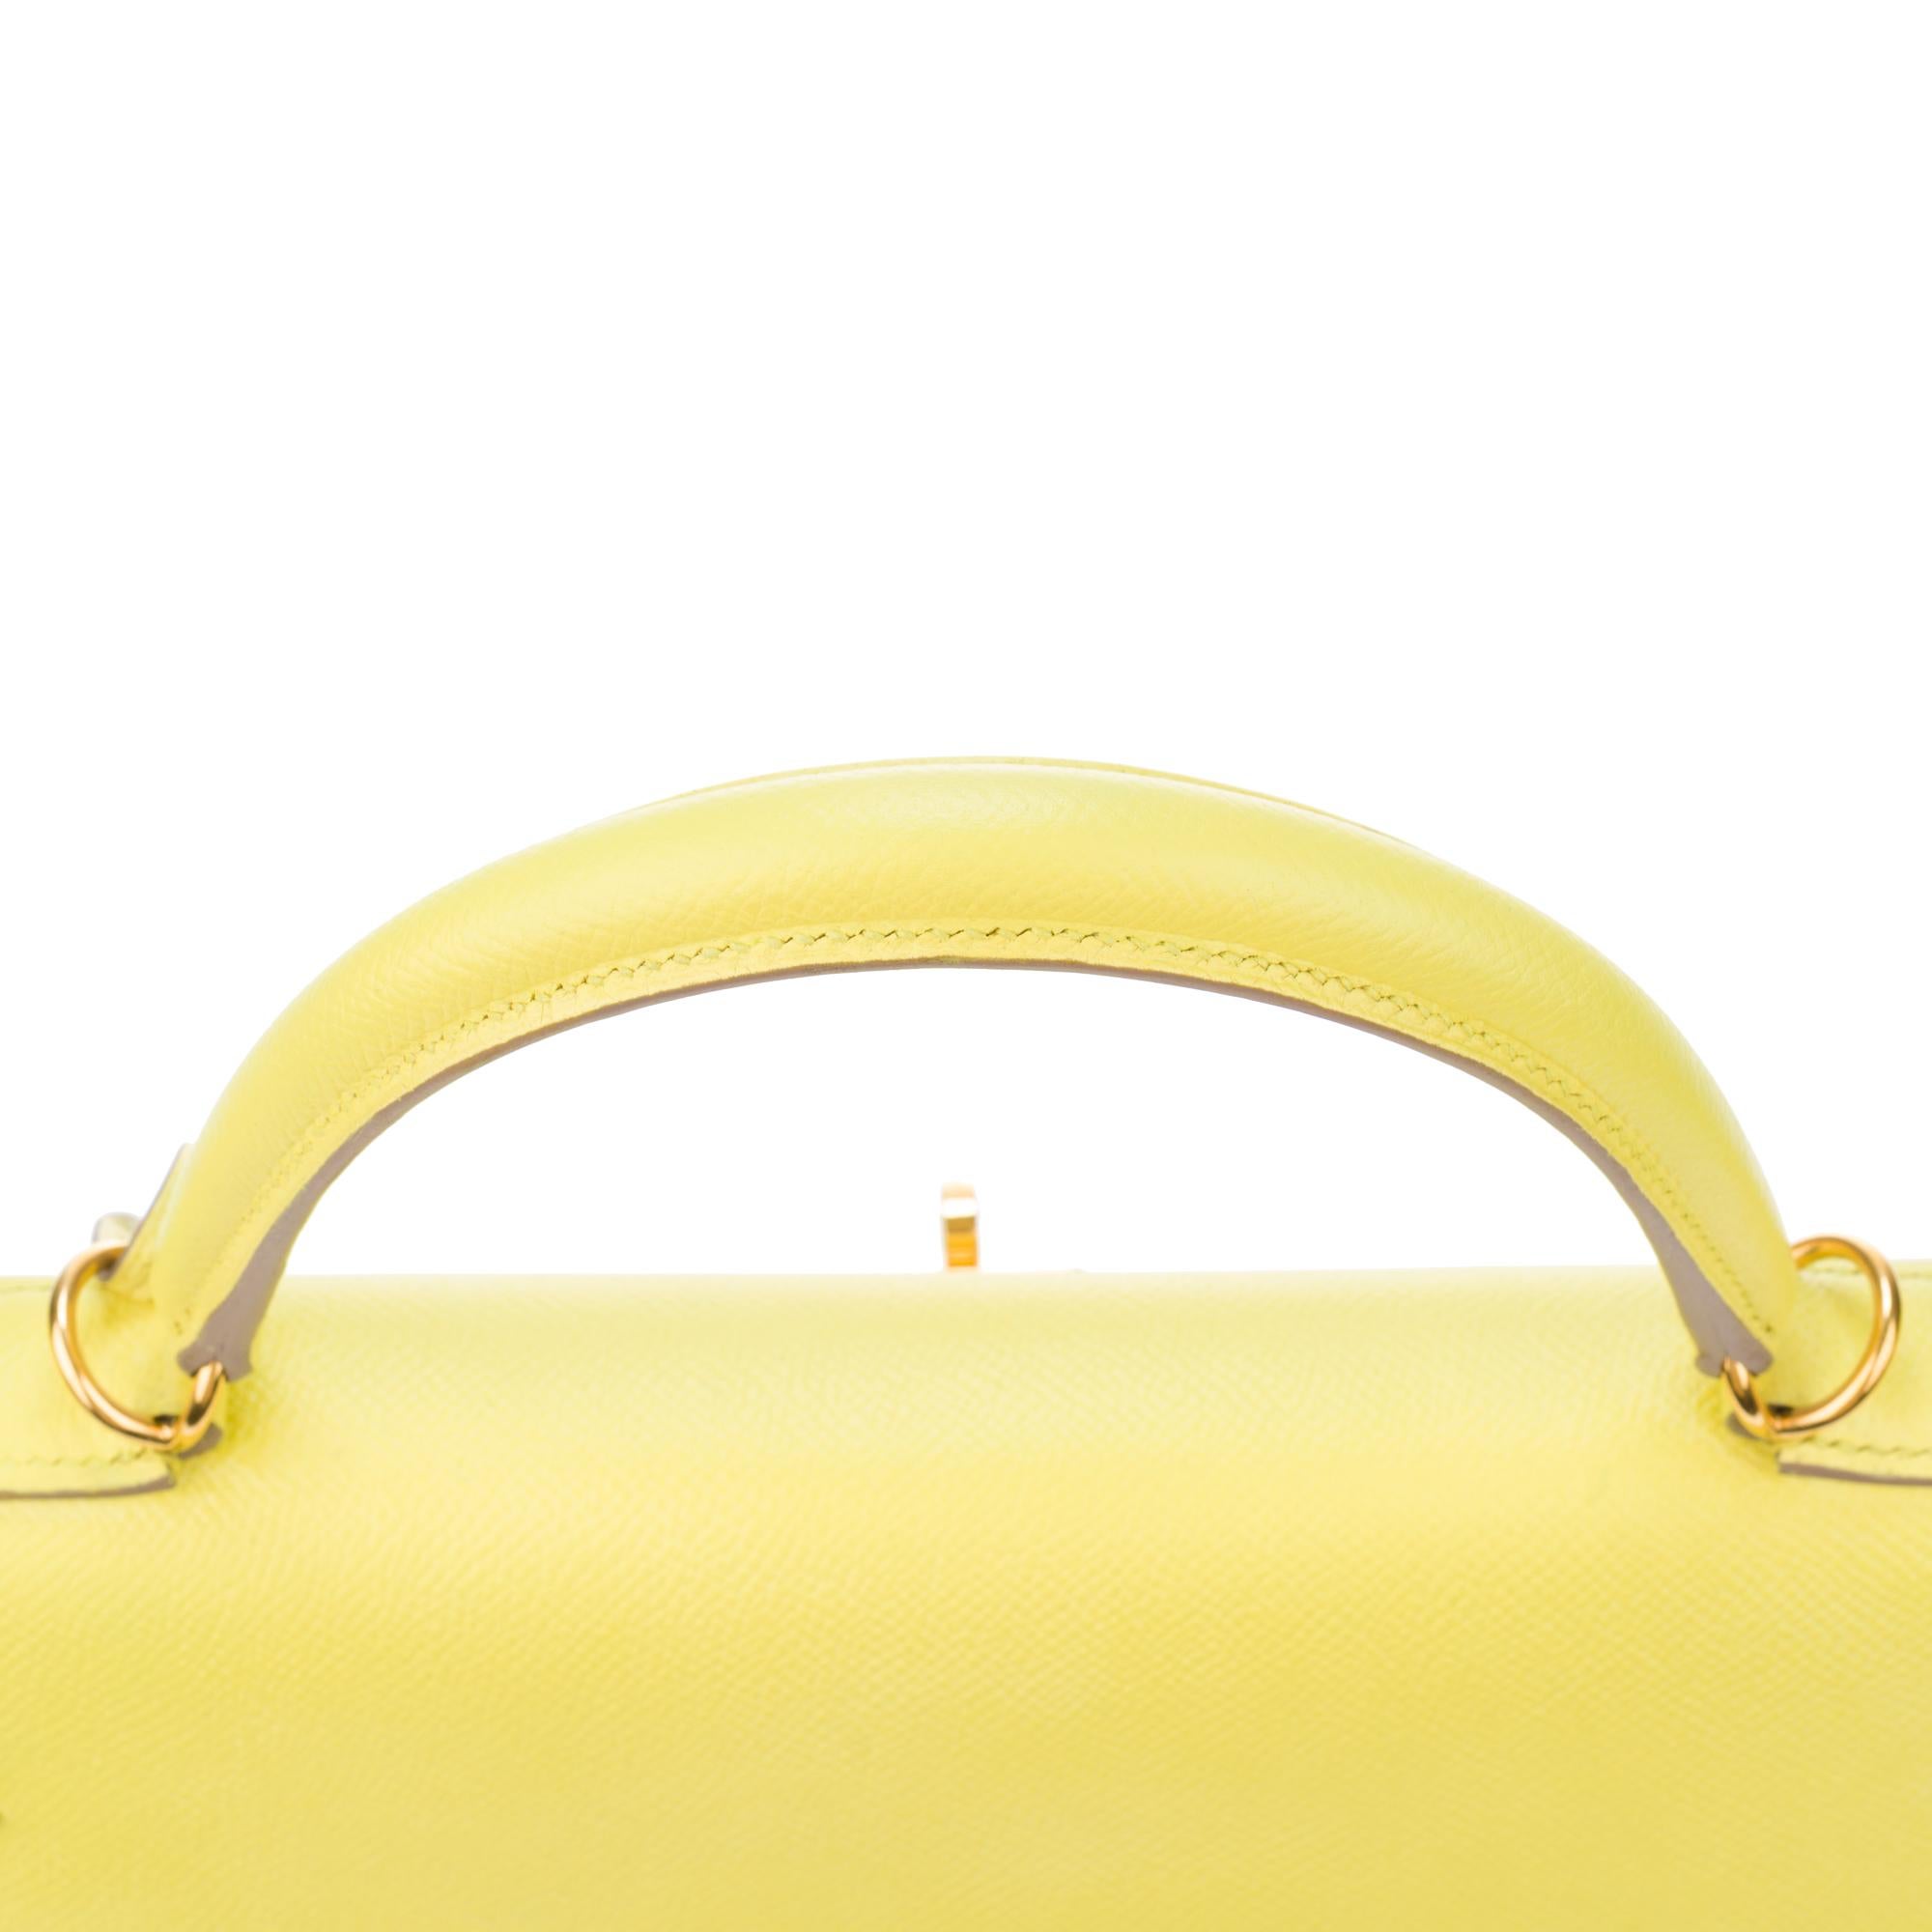 Amazing Hermès Kelly 35 handbag with strap in epsom yellow lemon color, GHW ! 1